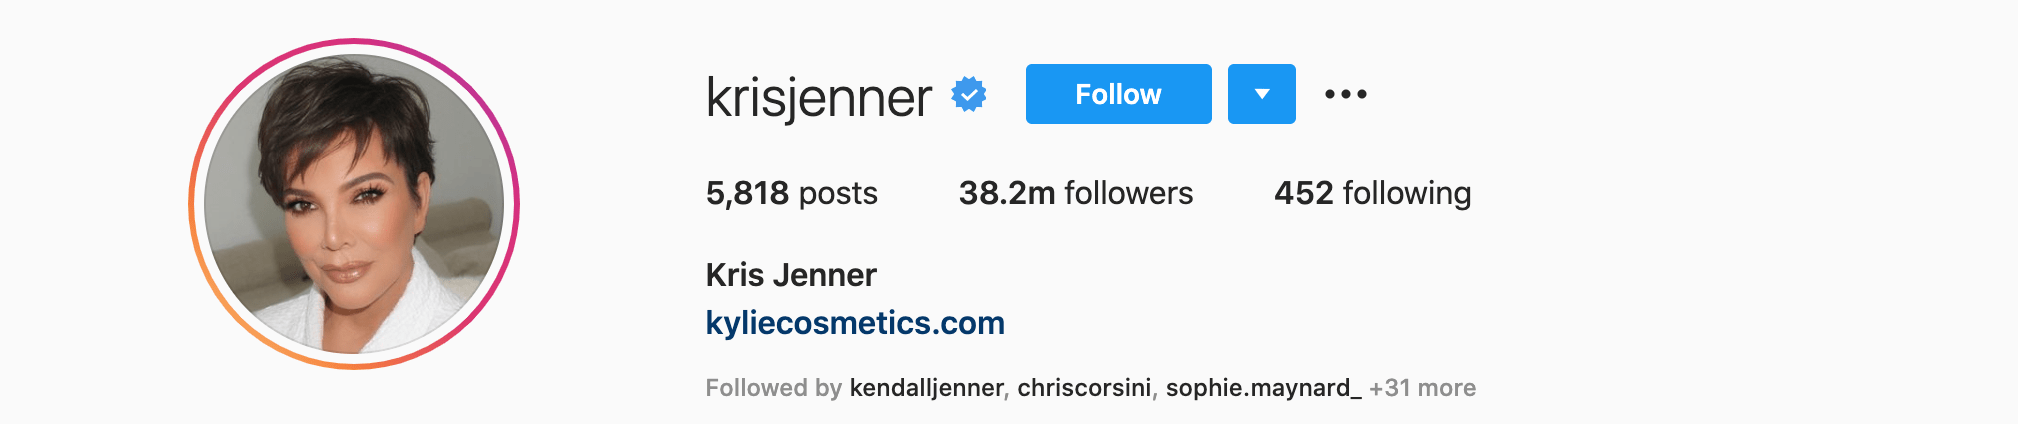 Top Instagram Influencers - KRIS JENNER